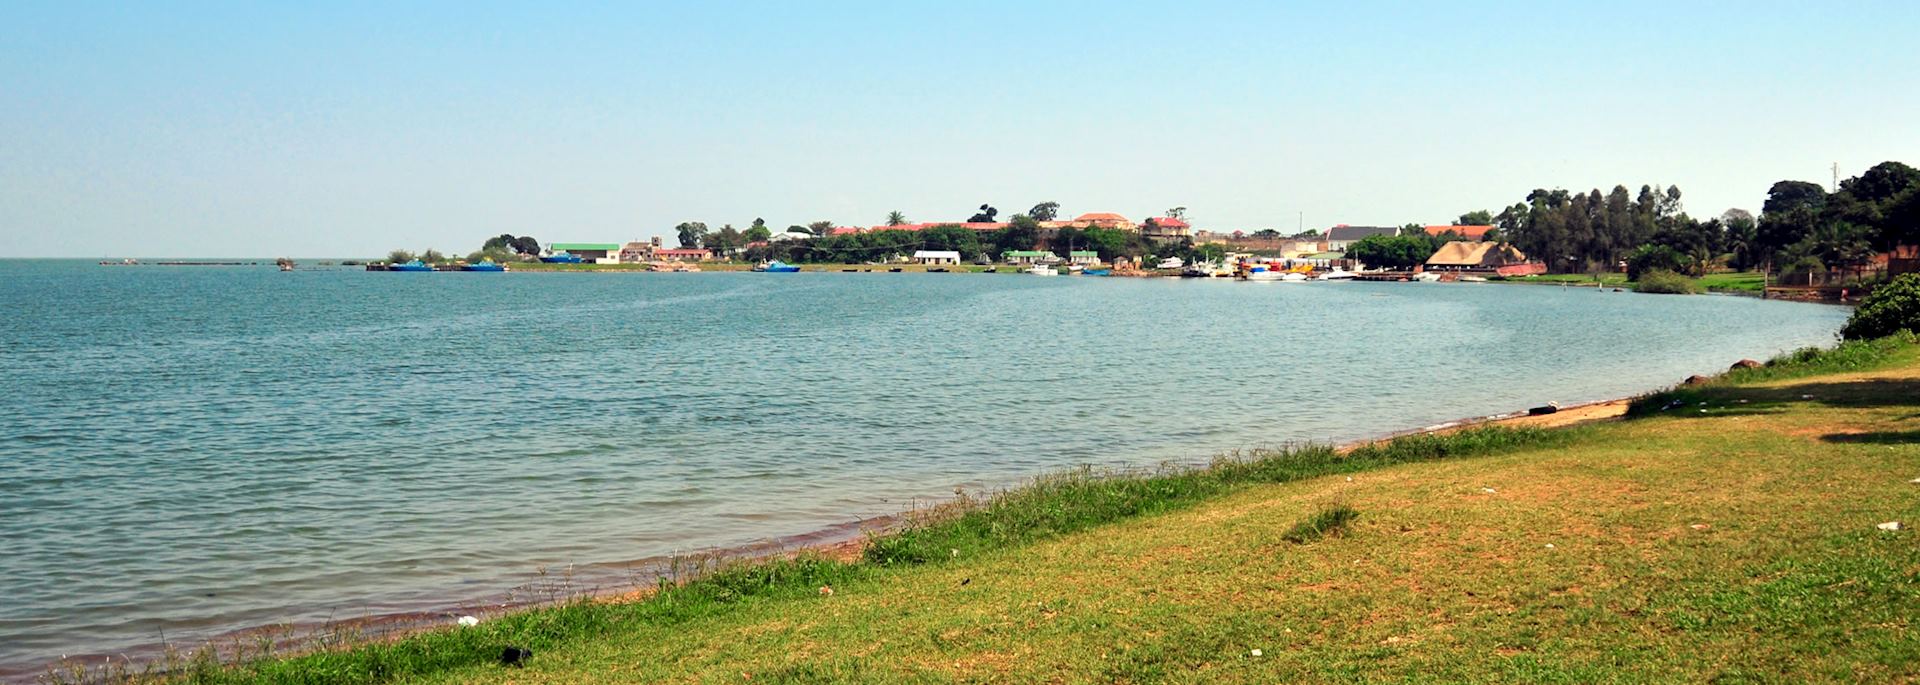 Botanical Beach in Entebbe